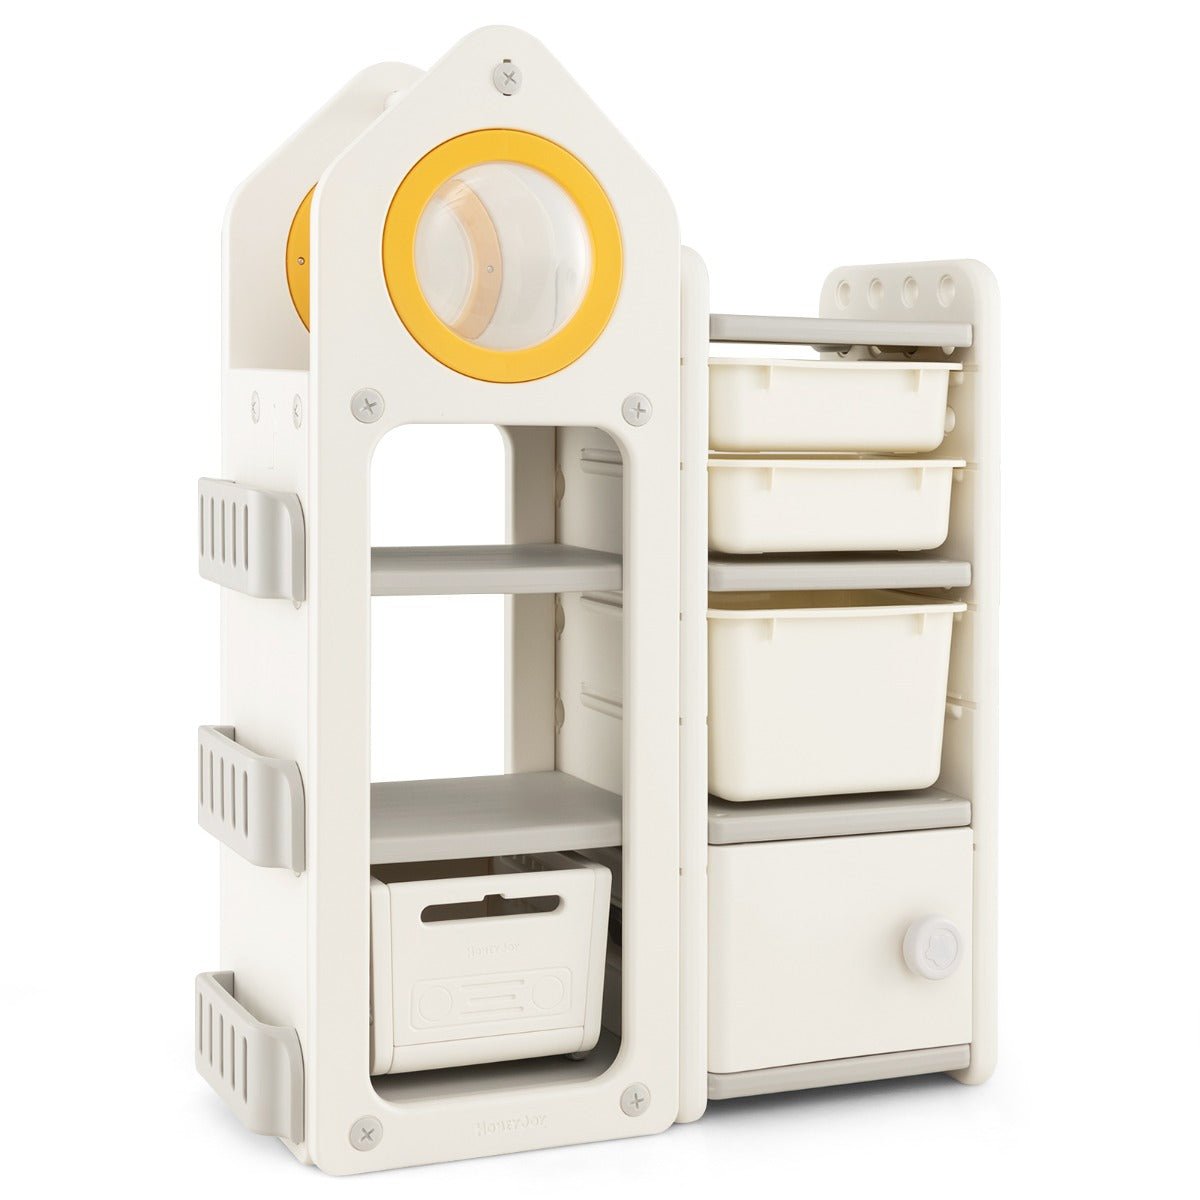 Shop Now - Kids Toy Storage Organizer